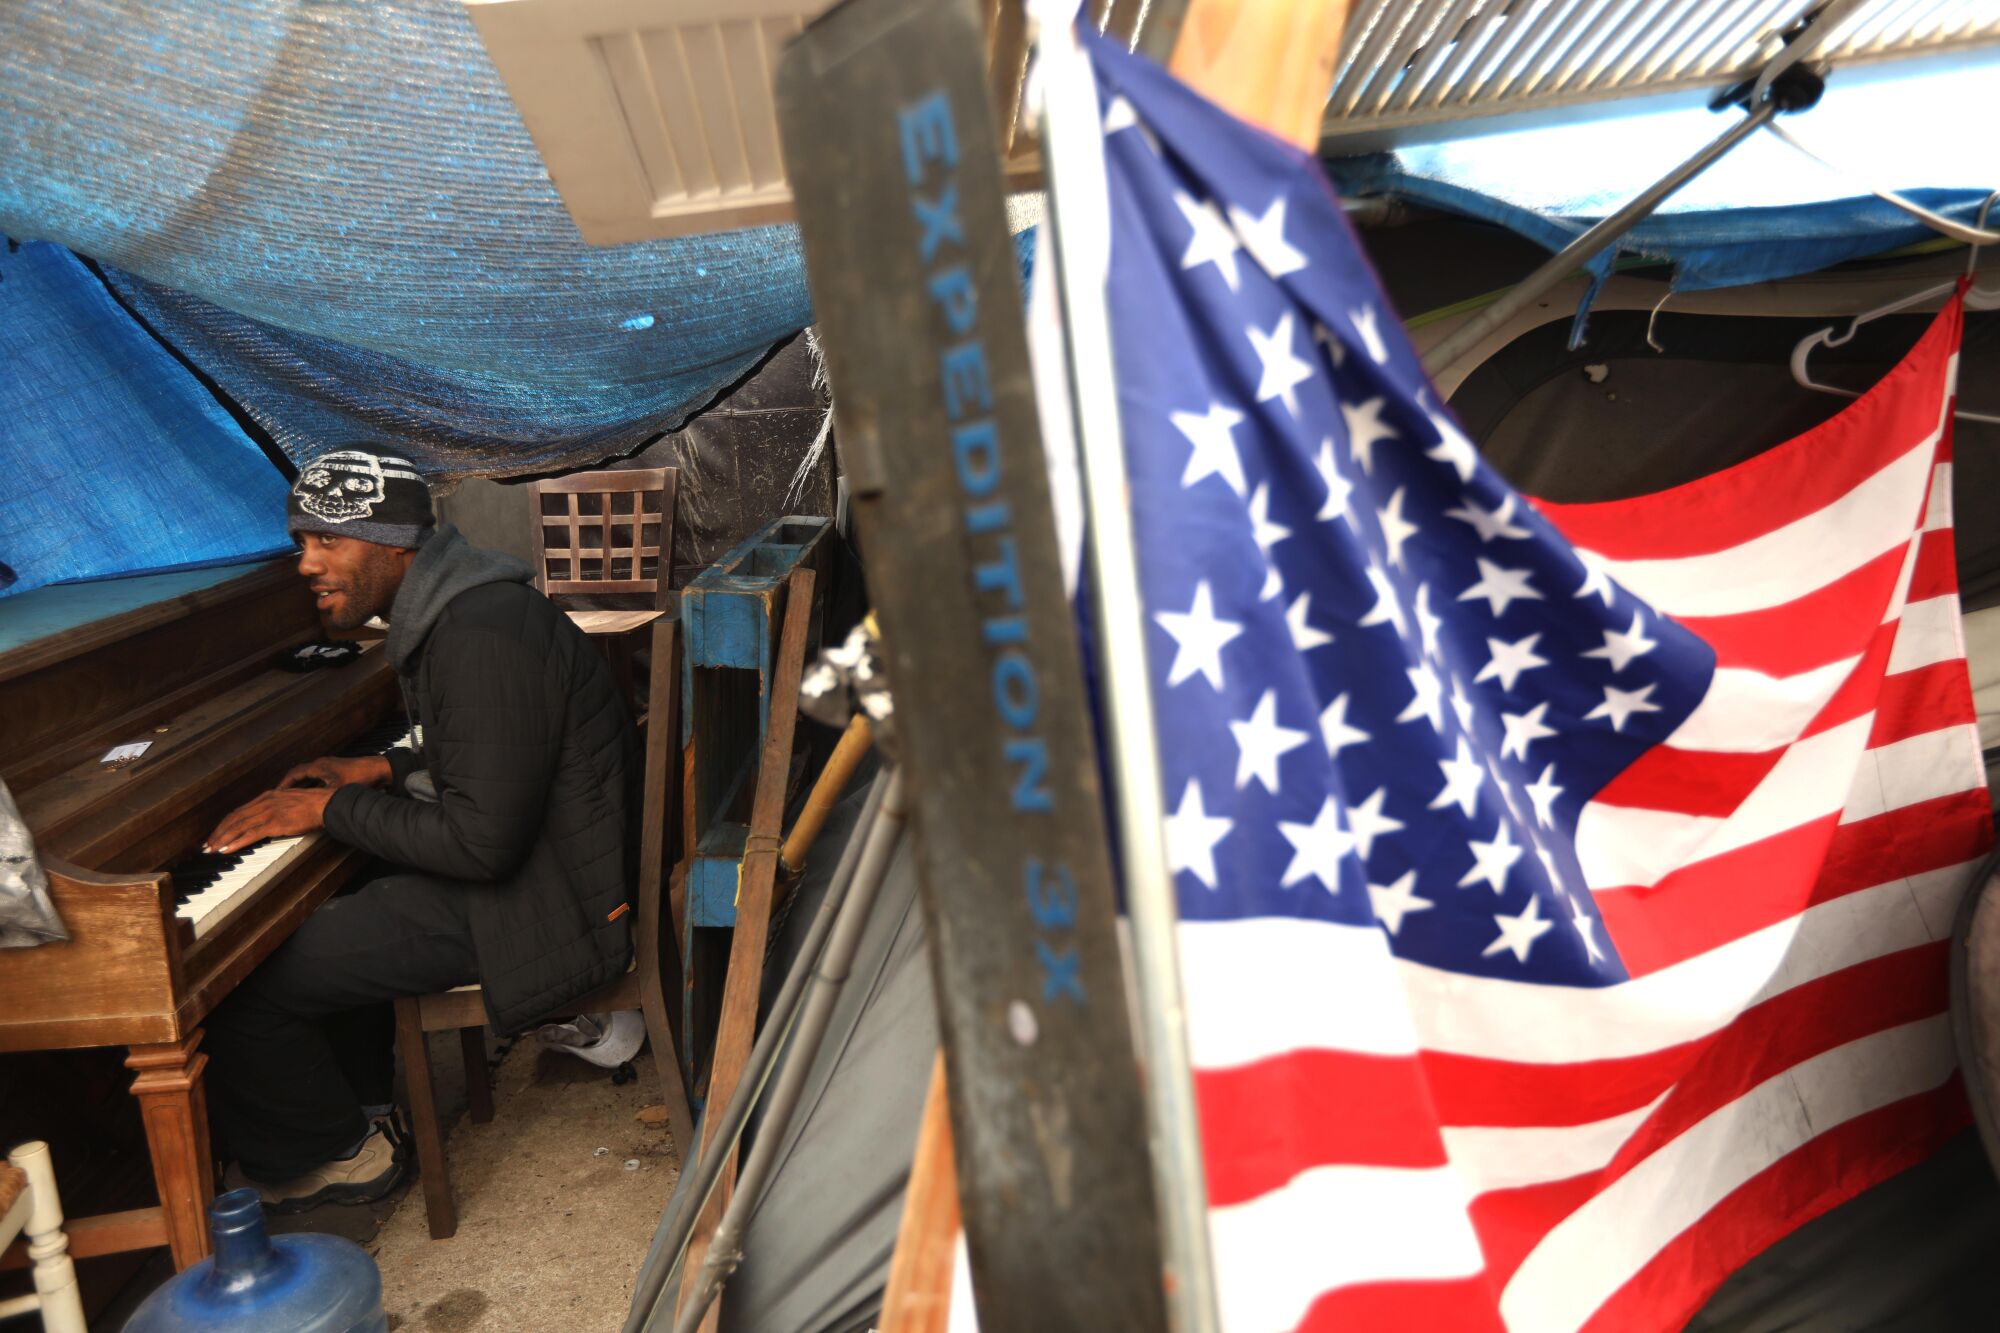  Iraq war veteran Lavon Johnson, 35, plays his piano inside his tent.